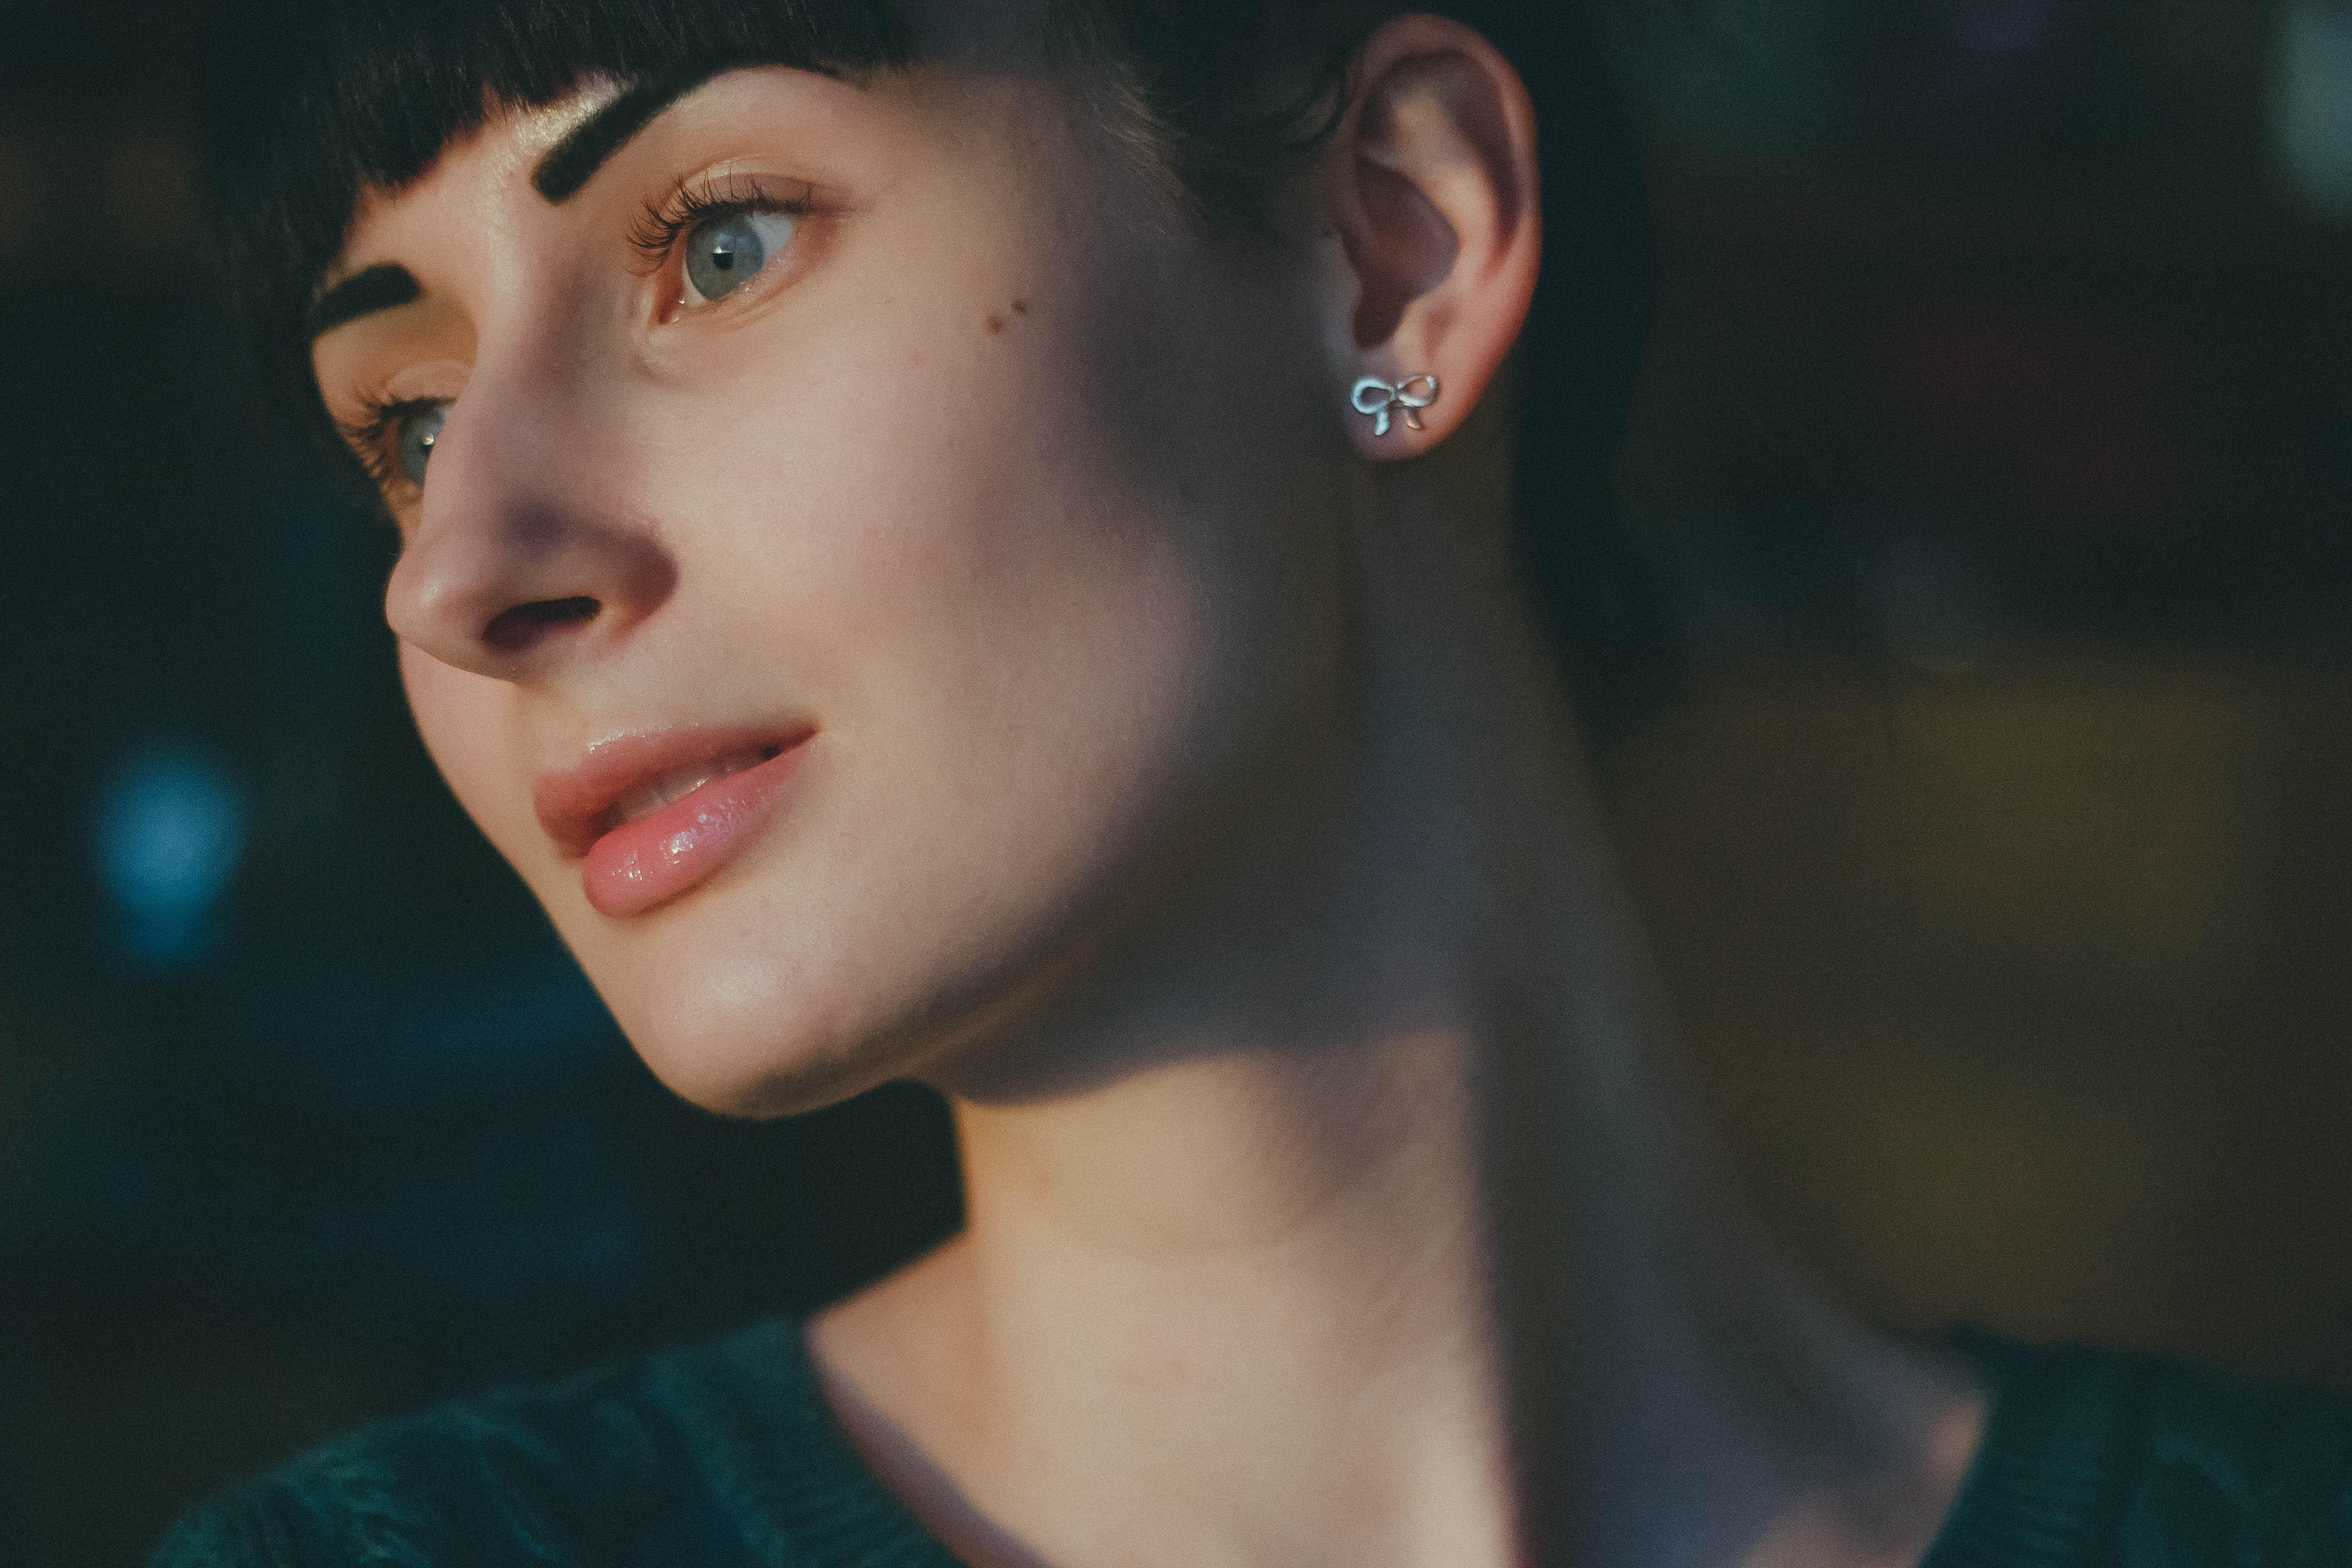 Woman wearing silver earrings and green shirt photo